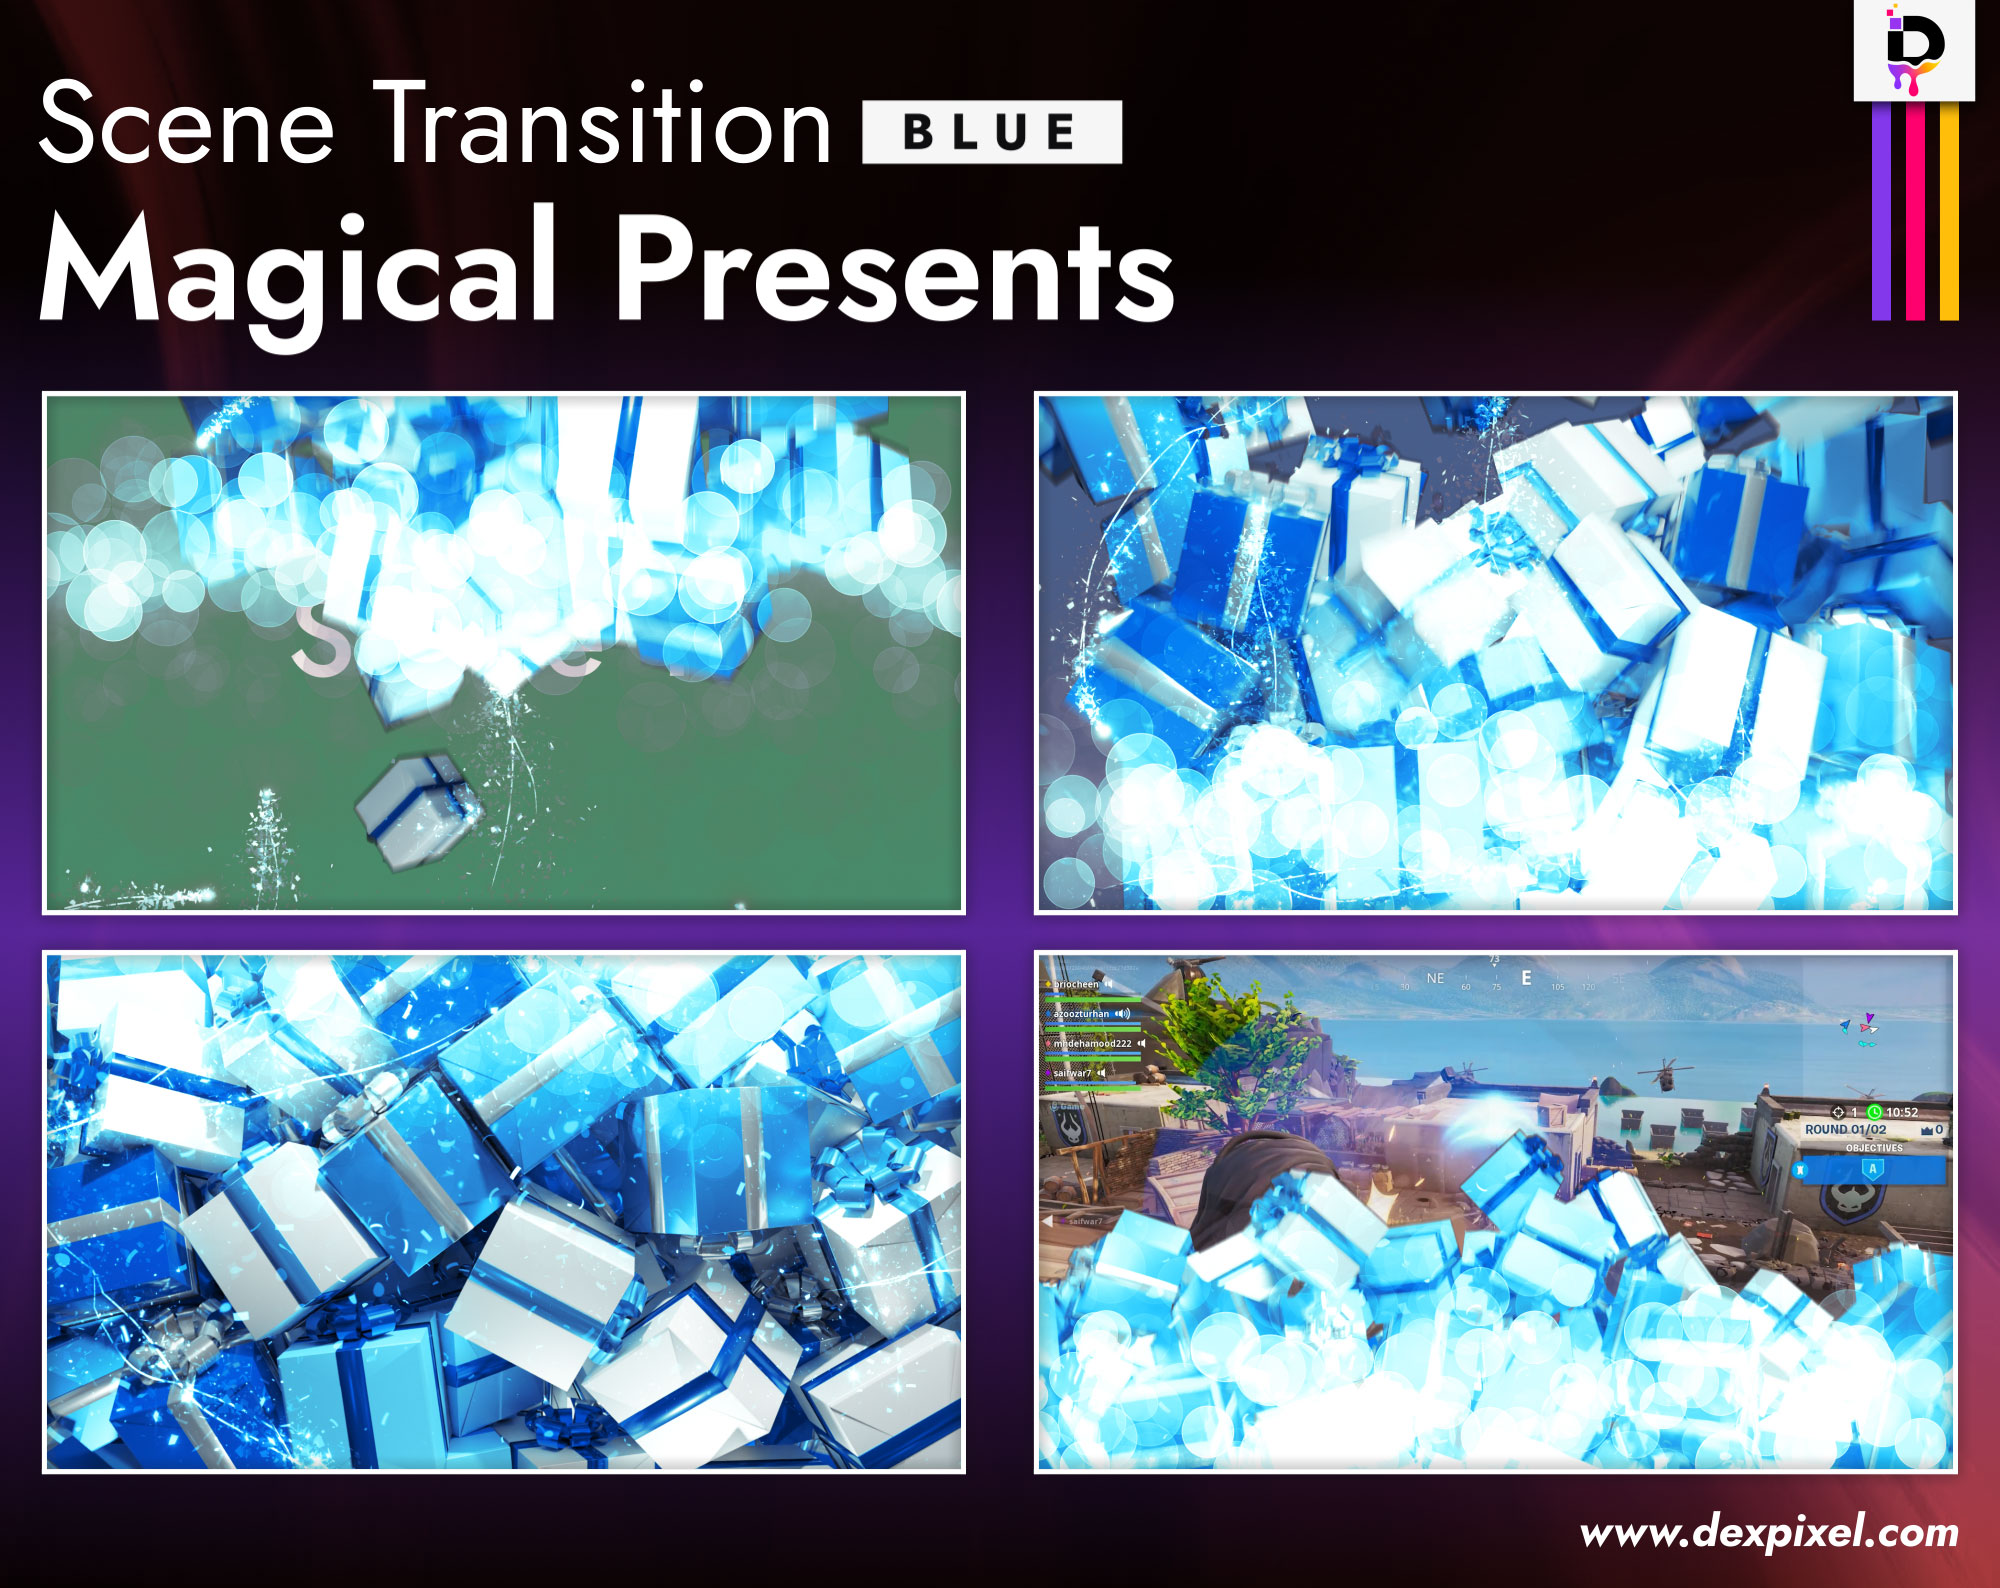 Scene Transition Dexpixel Magical Presents Blue